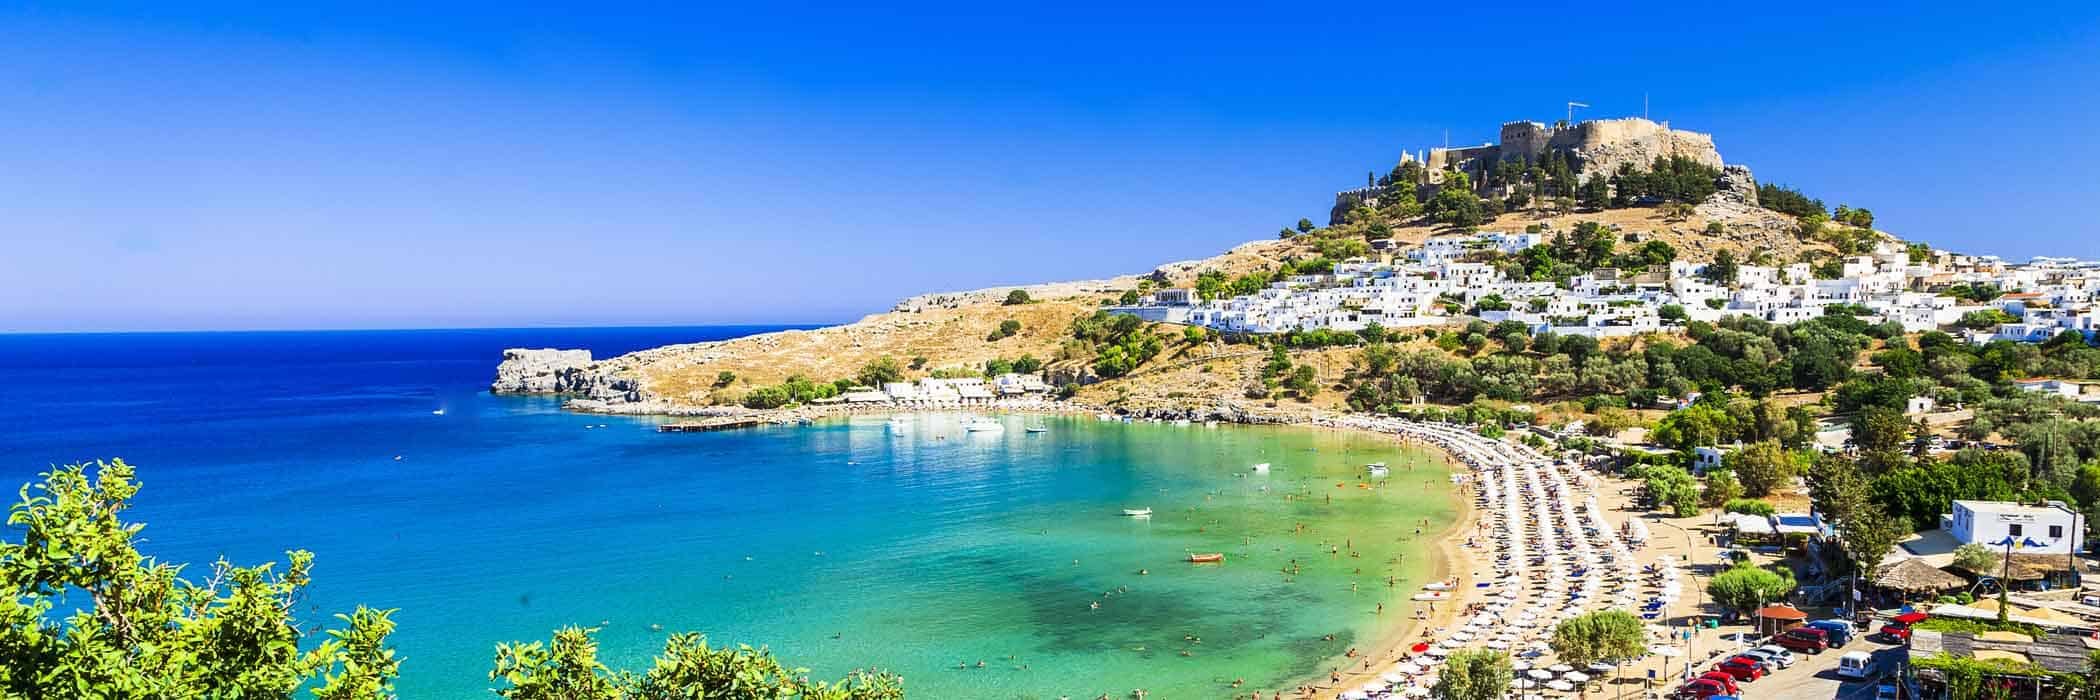 Lindos Beach, Rhodes - Jet2 Holidays To Greece